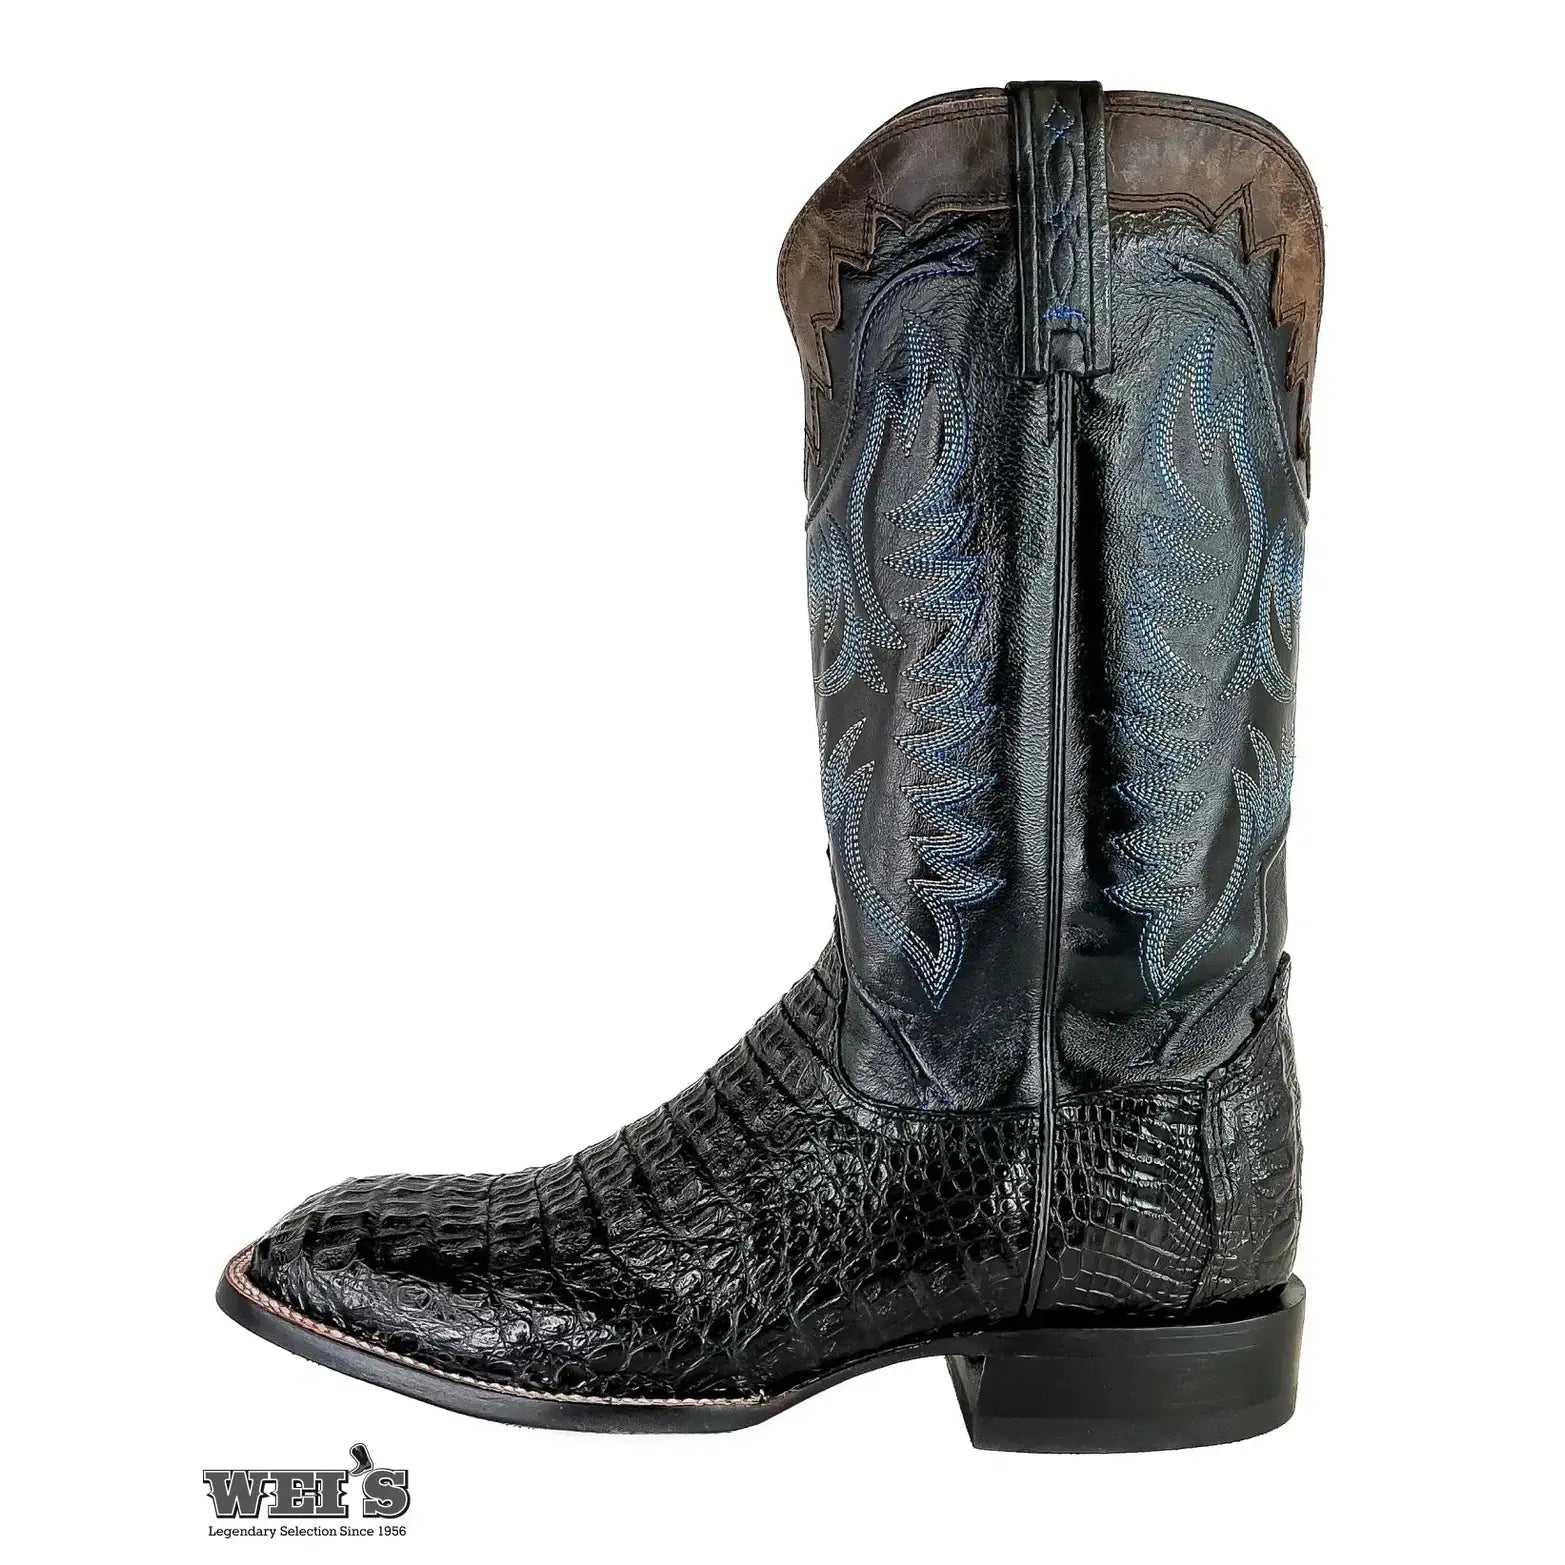 Lucchese Men's Cowboy Boots 14" Exotic Caiman Hornback Square Toe M4547